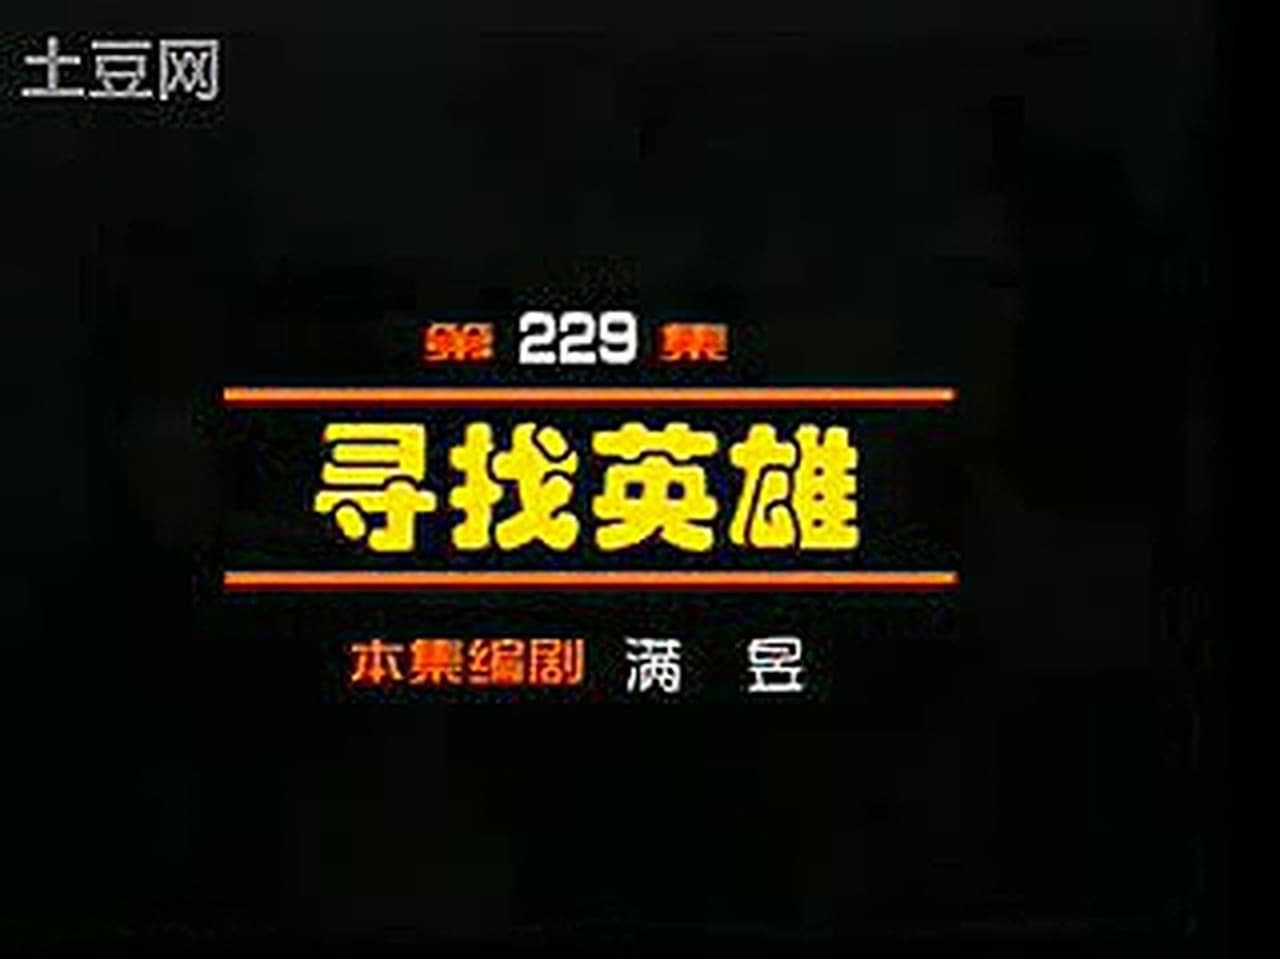 Episode 229